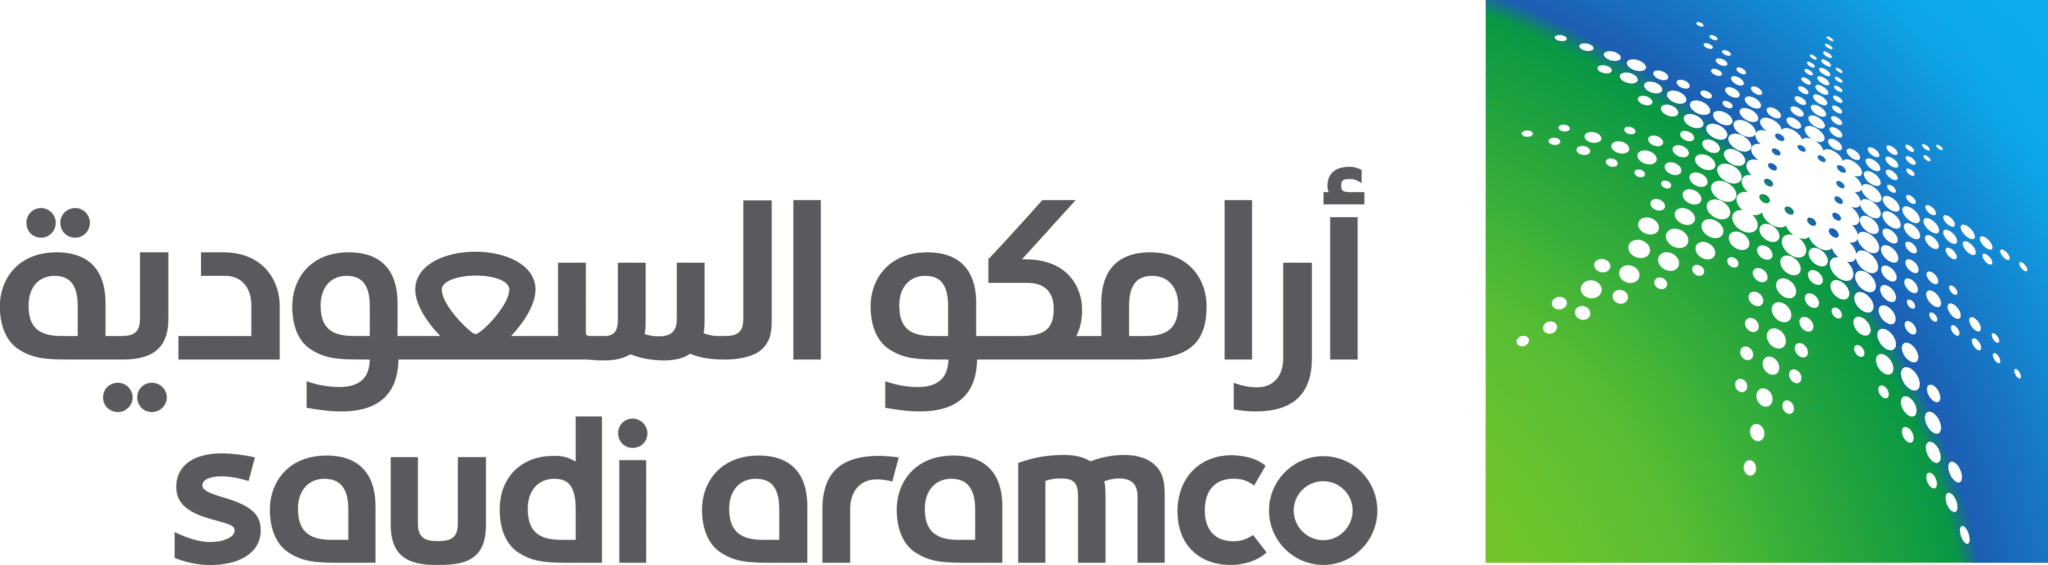 https://renown-group.co.uk/wp-content/uploads/2021/06/saudi-aramco-logo.png